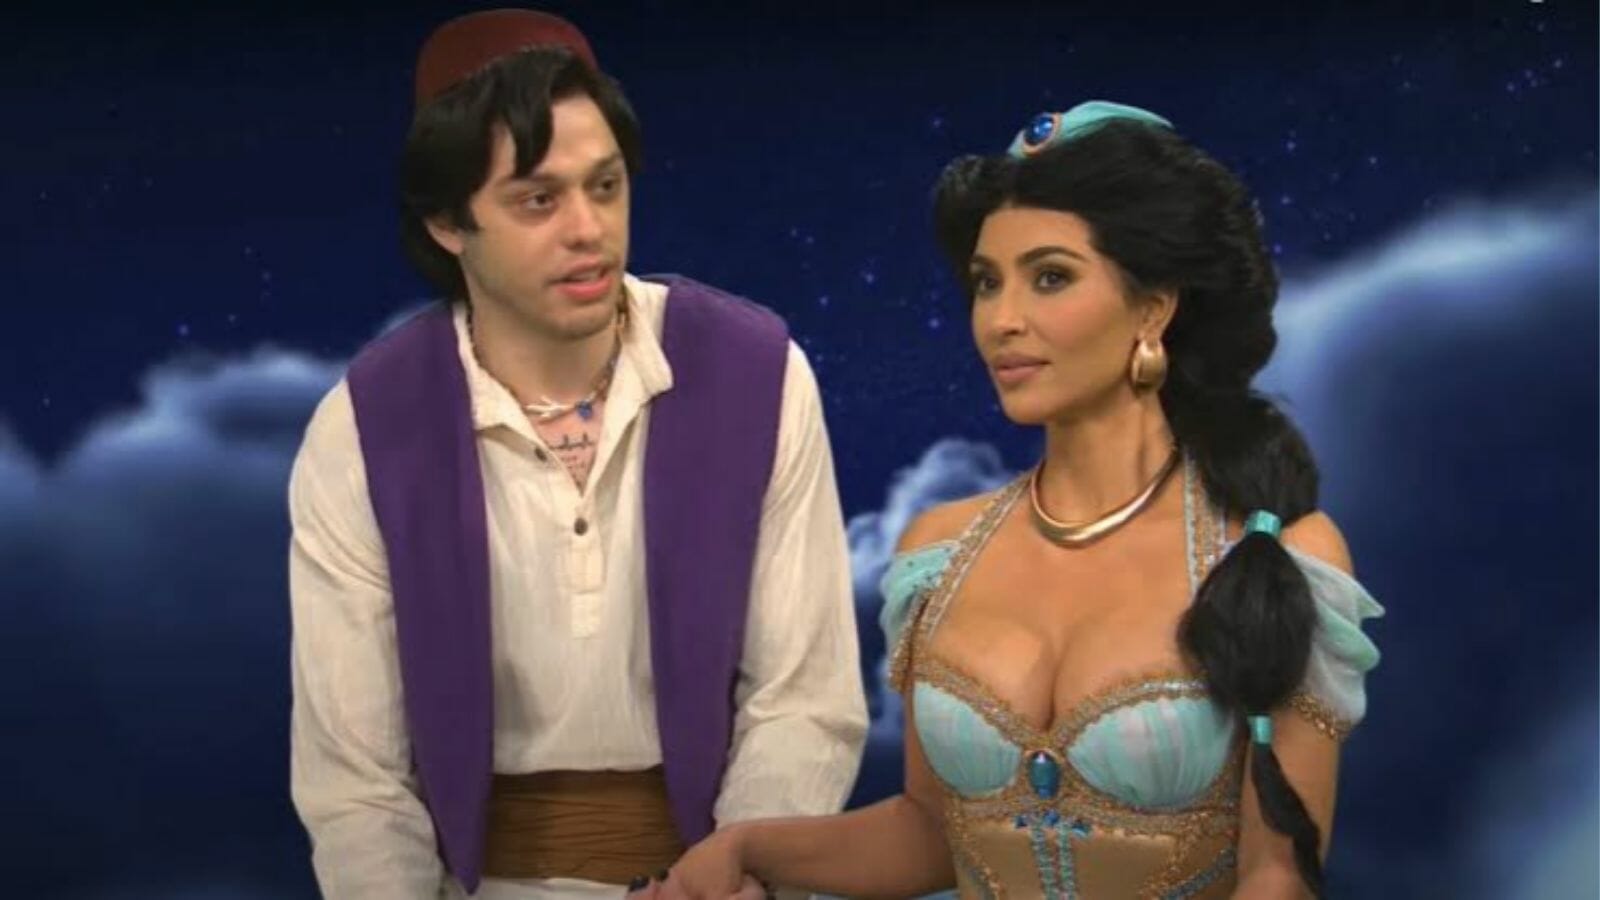 Pete Davidson and Kim Kardashian in the "Aladdin themed" SNL sketch